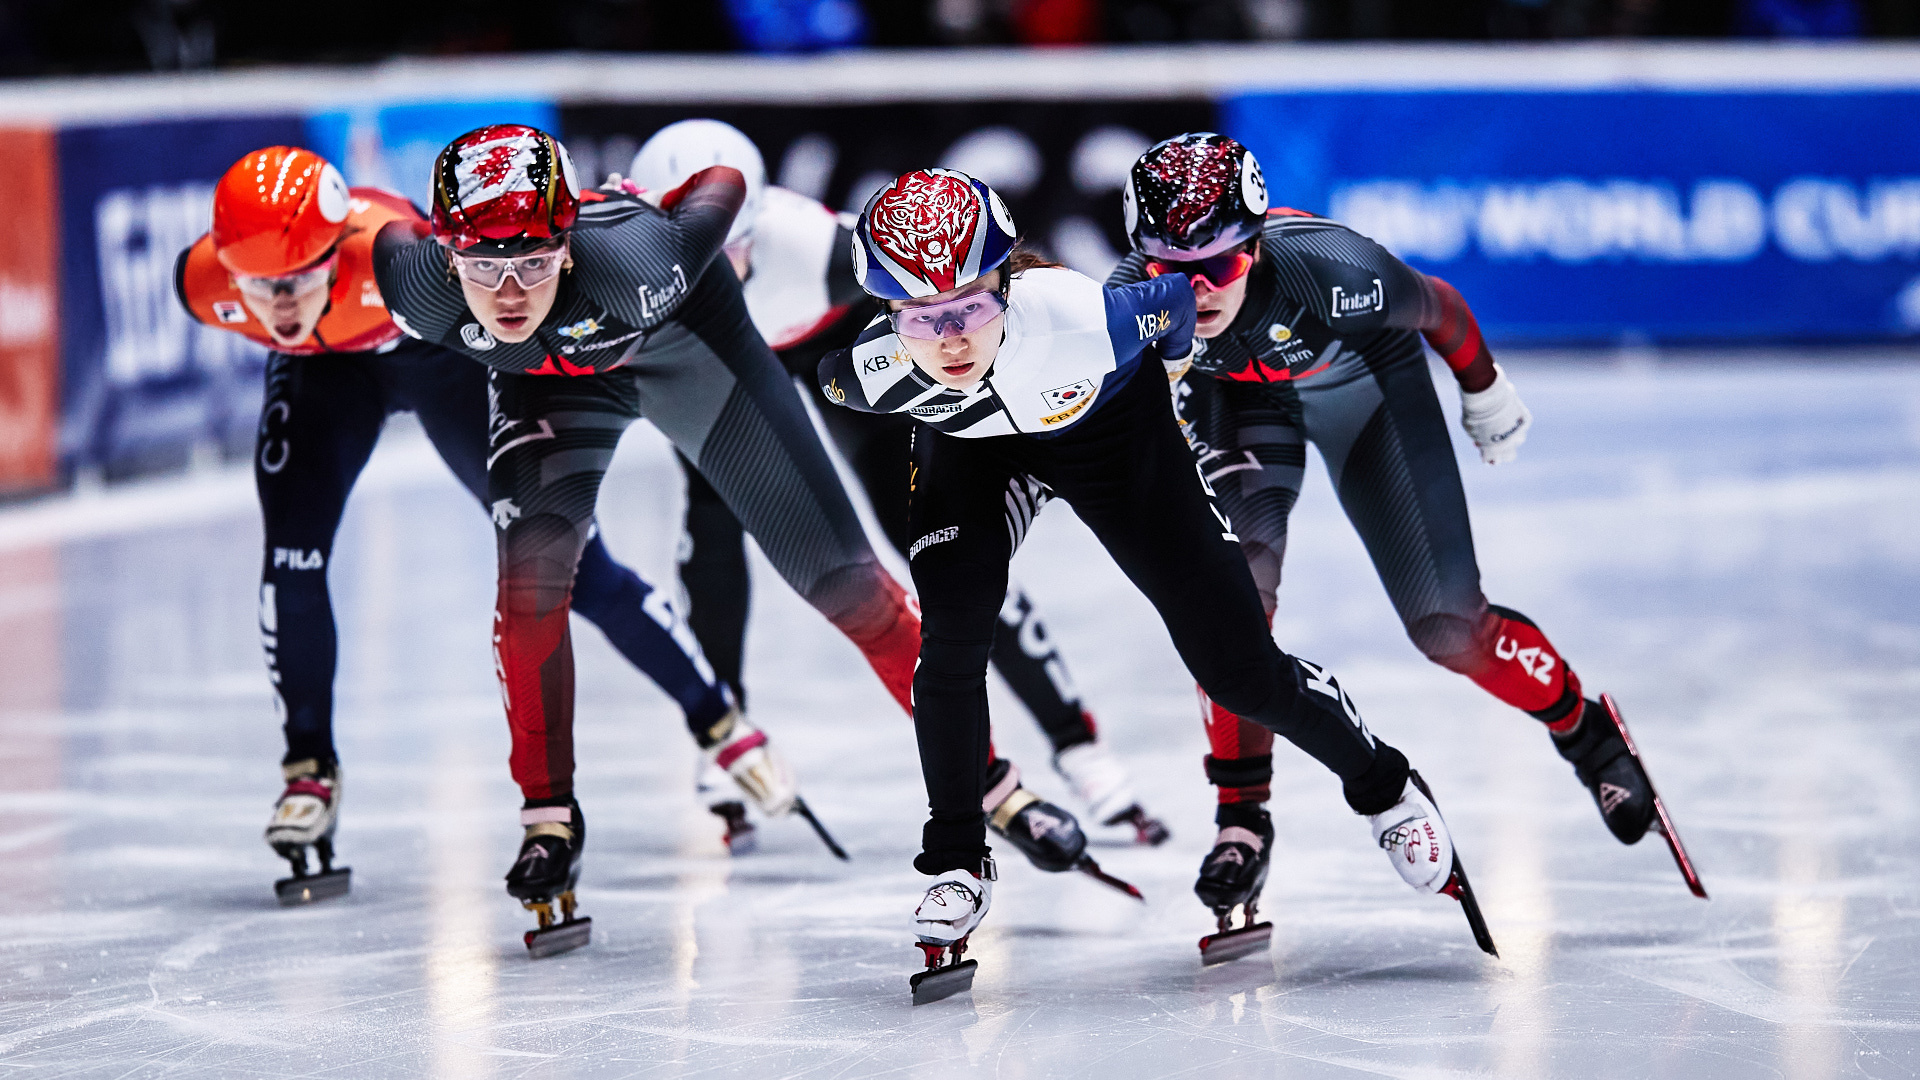 Speed Skating: Short track, Beijing 2022, Final day medals, Men's relay, Women's 1500 m, Skating races. 1920x1080 Full HD Wallpaper.